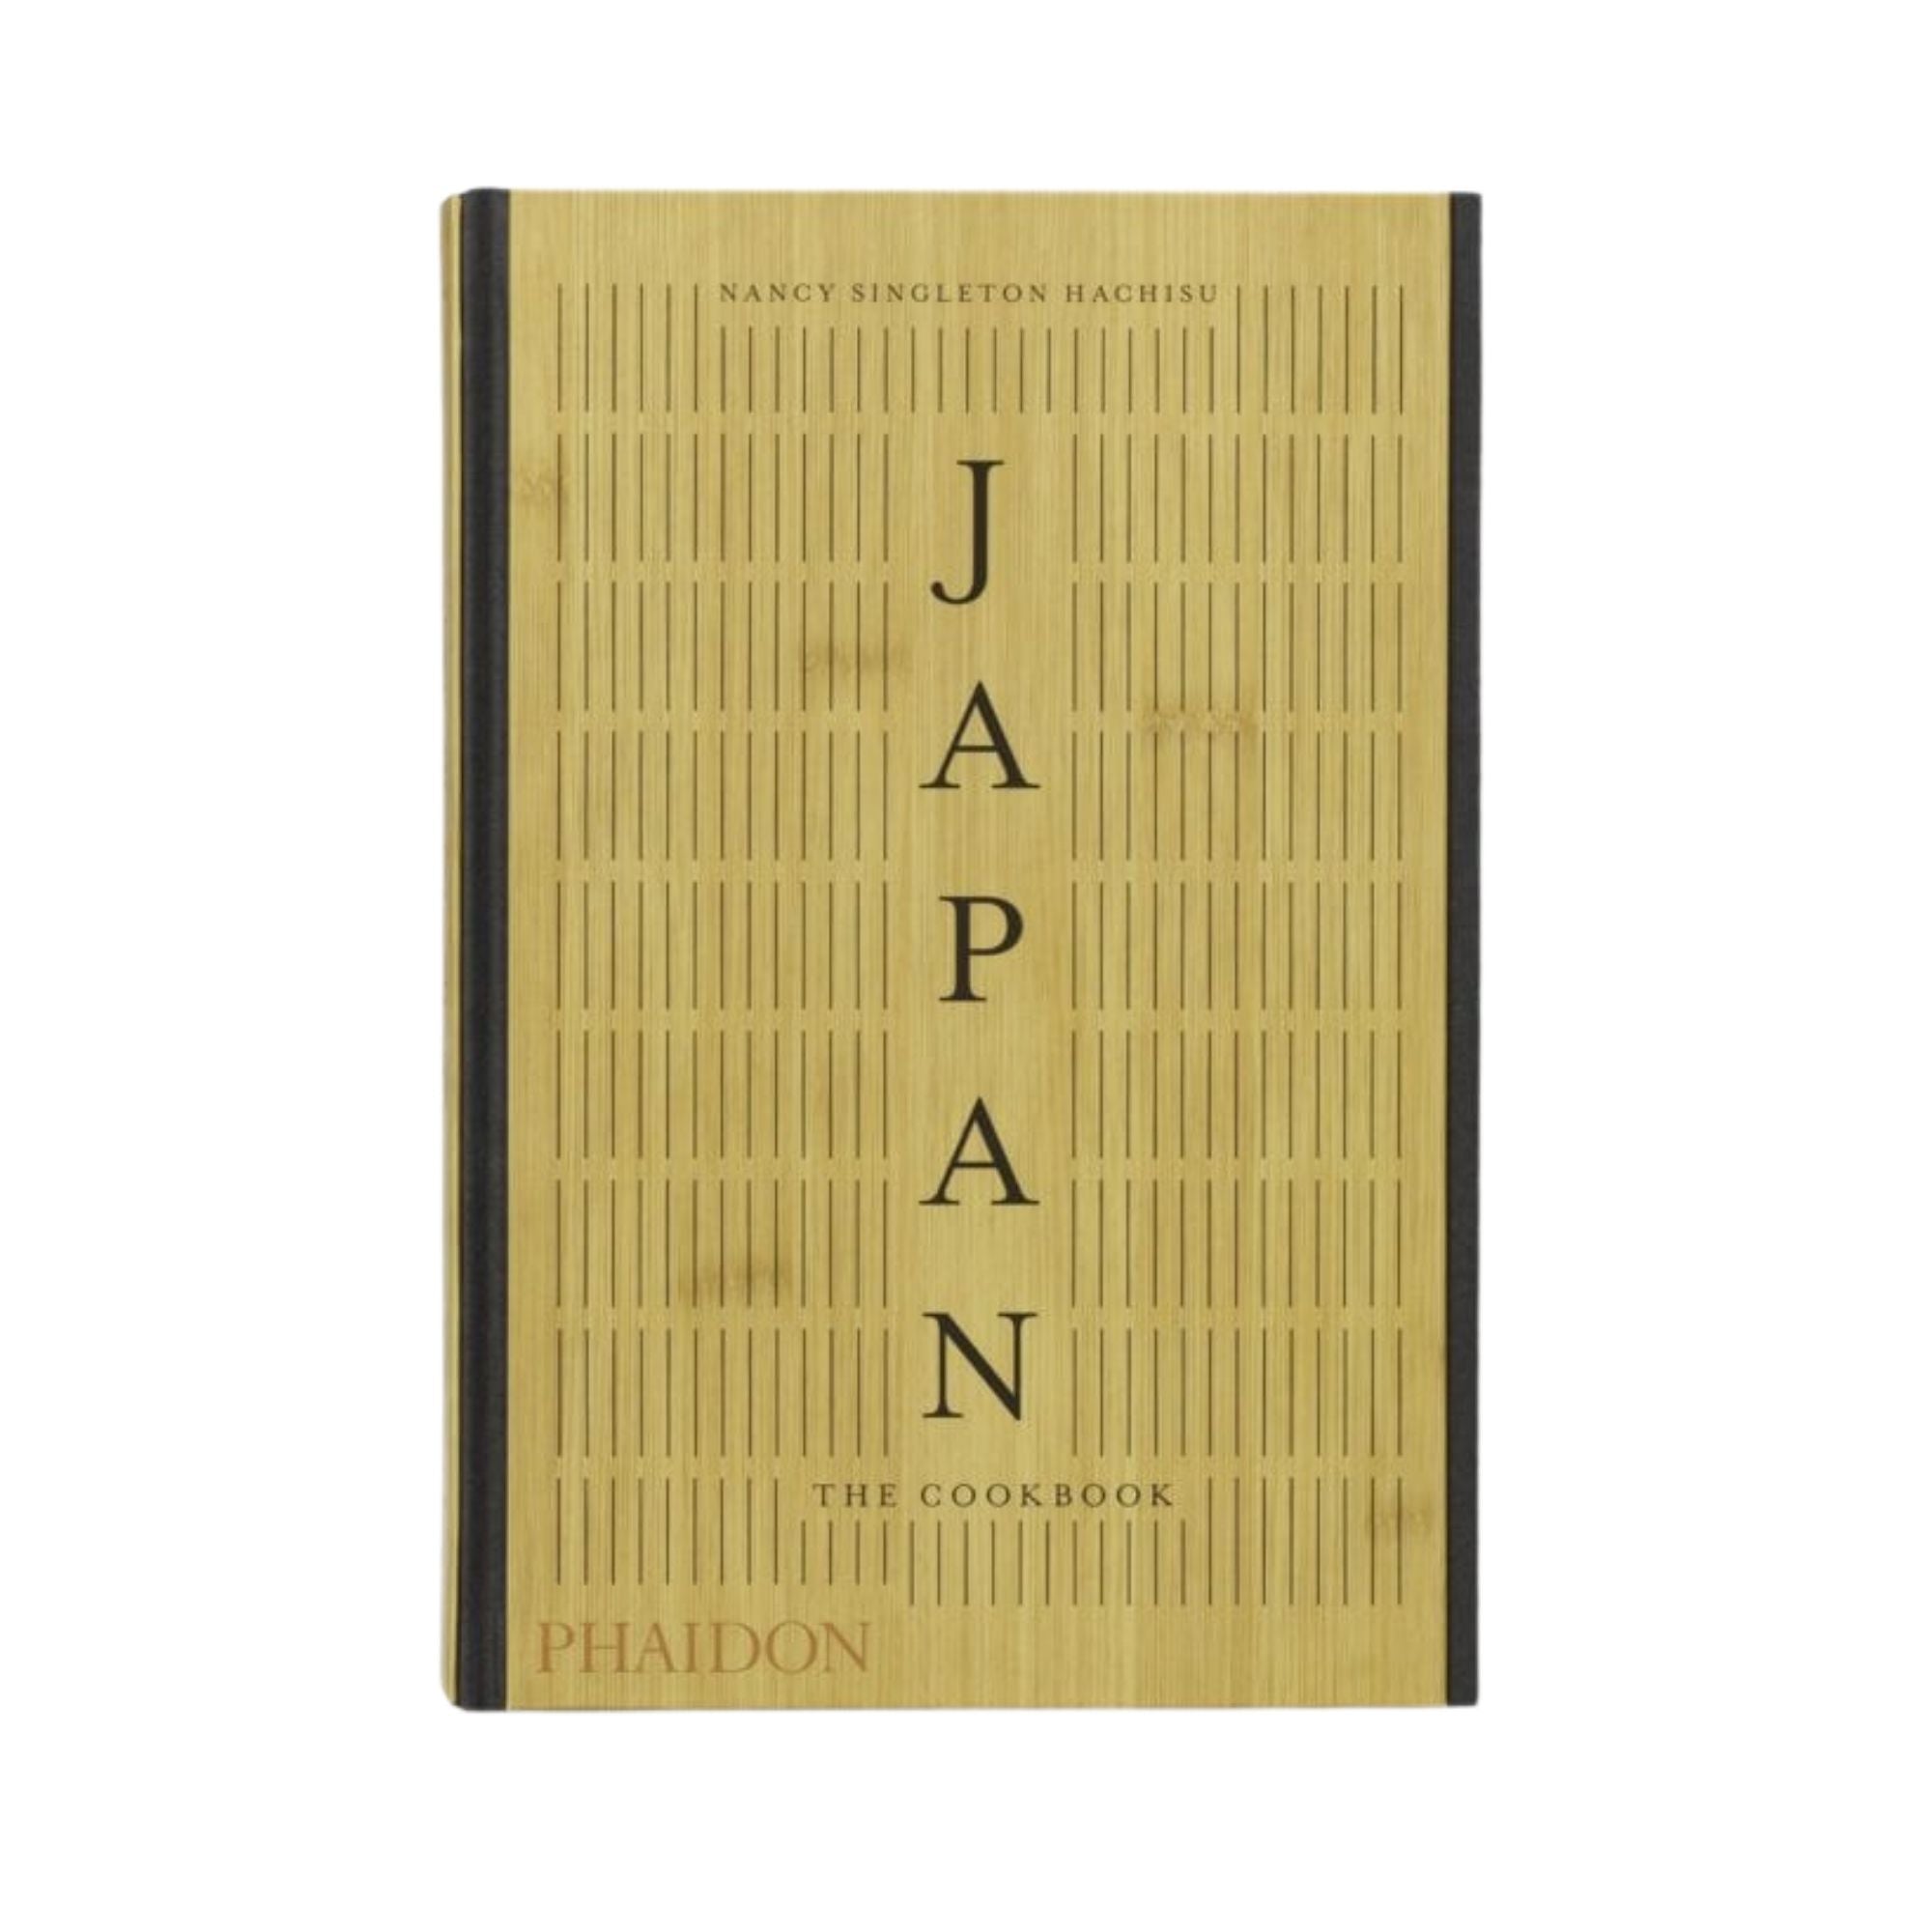 Japan – The cookbook